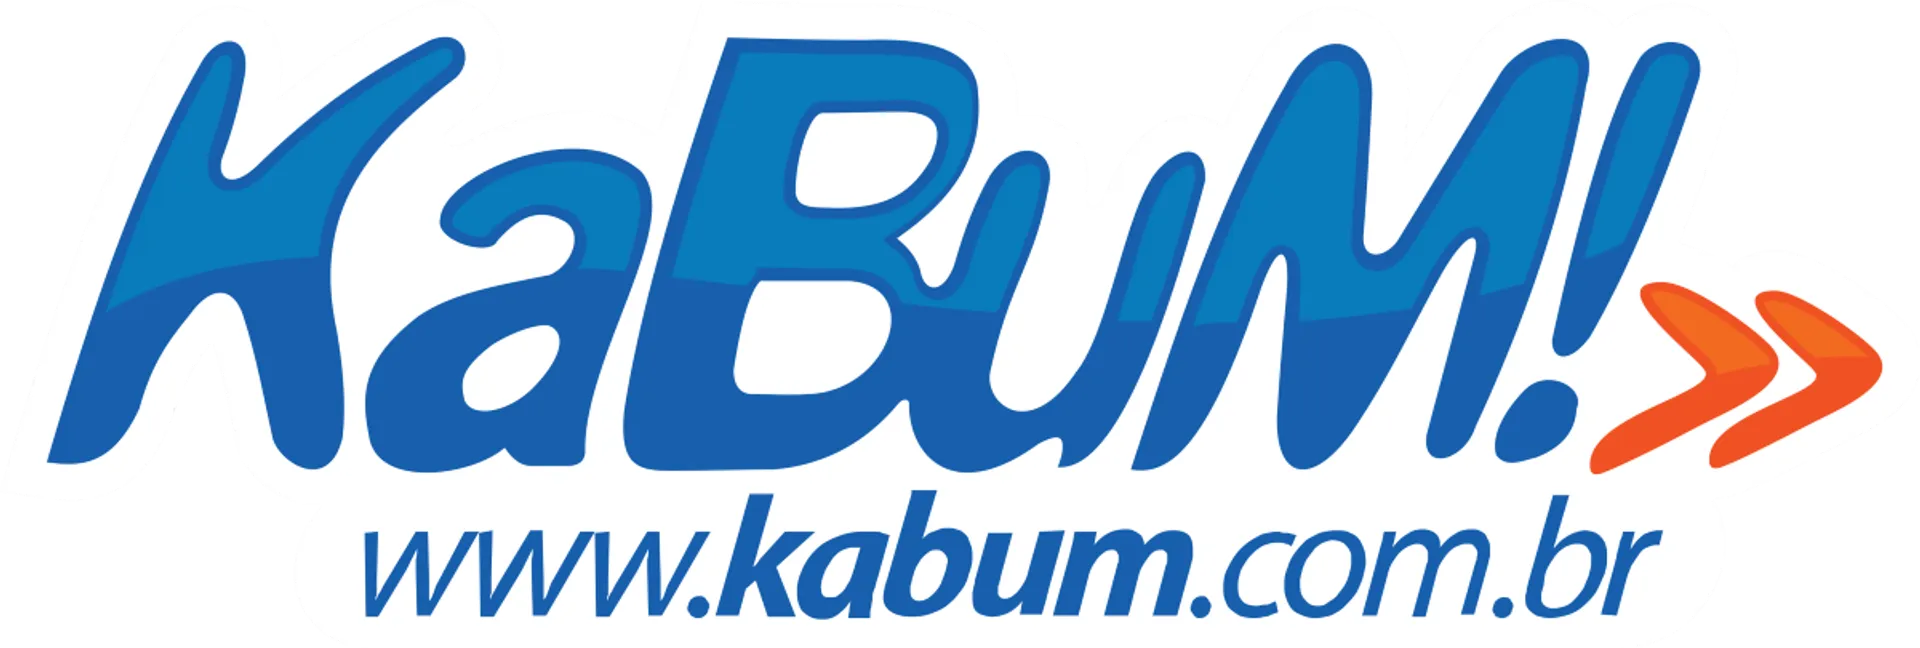 KABUM logo